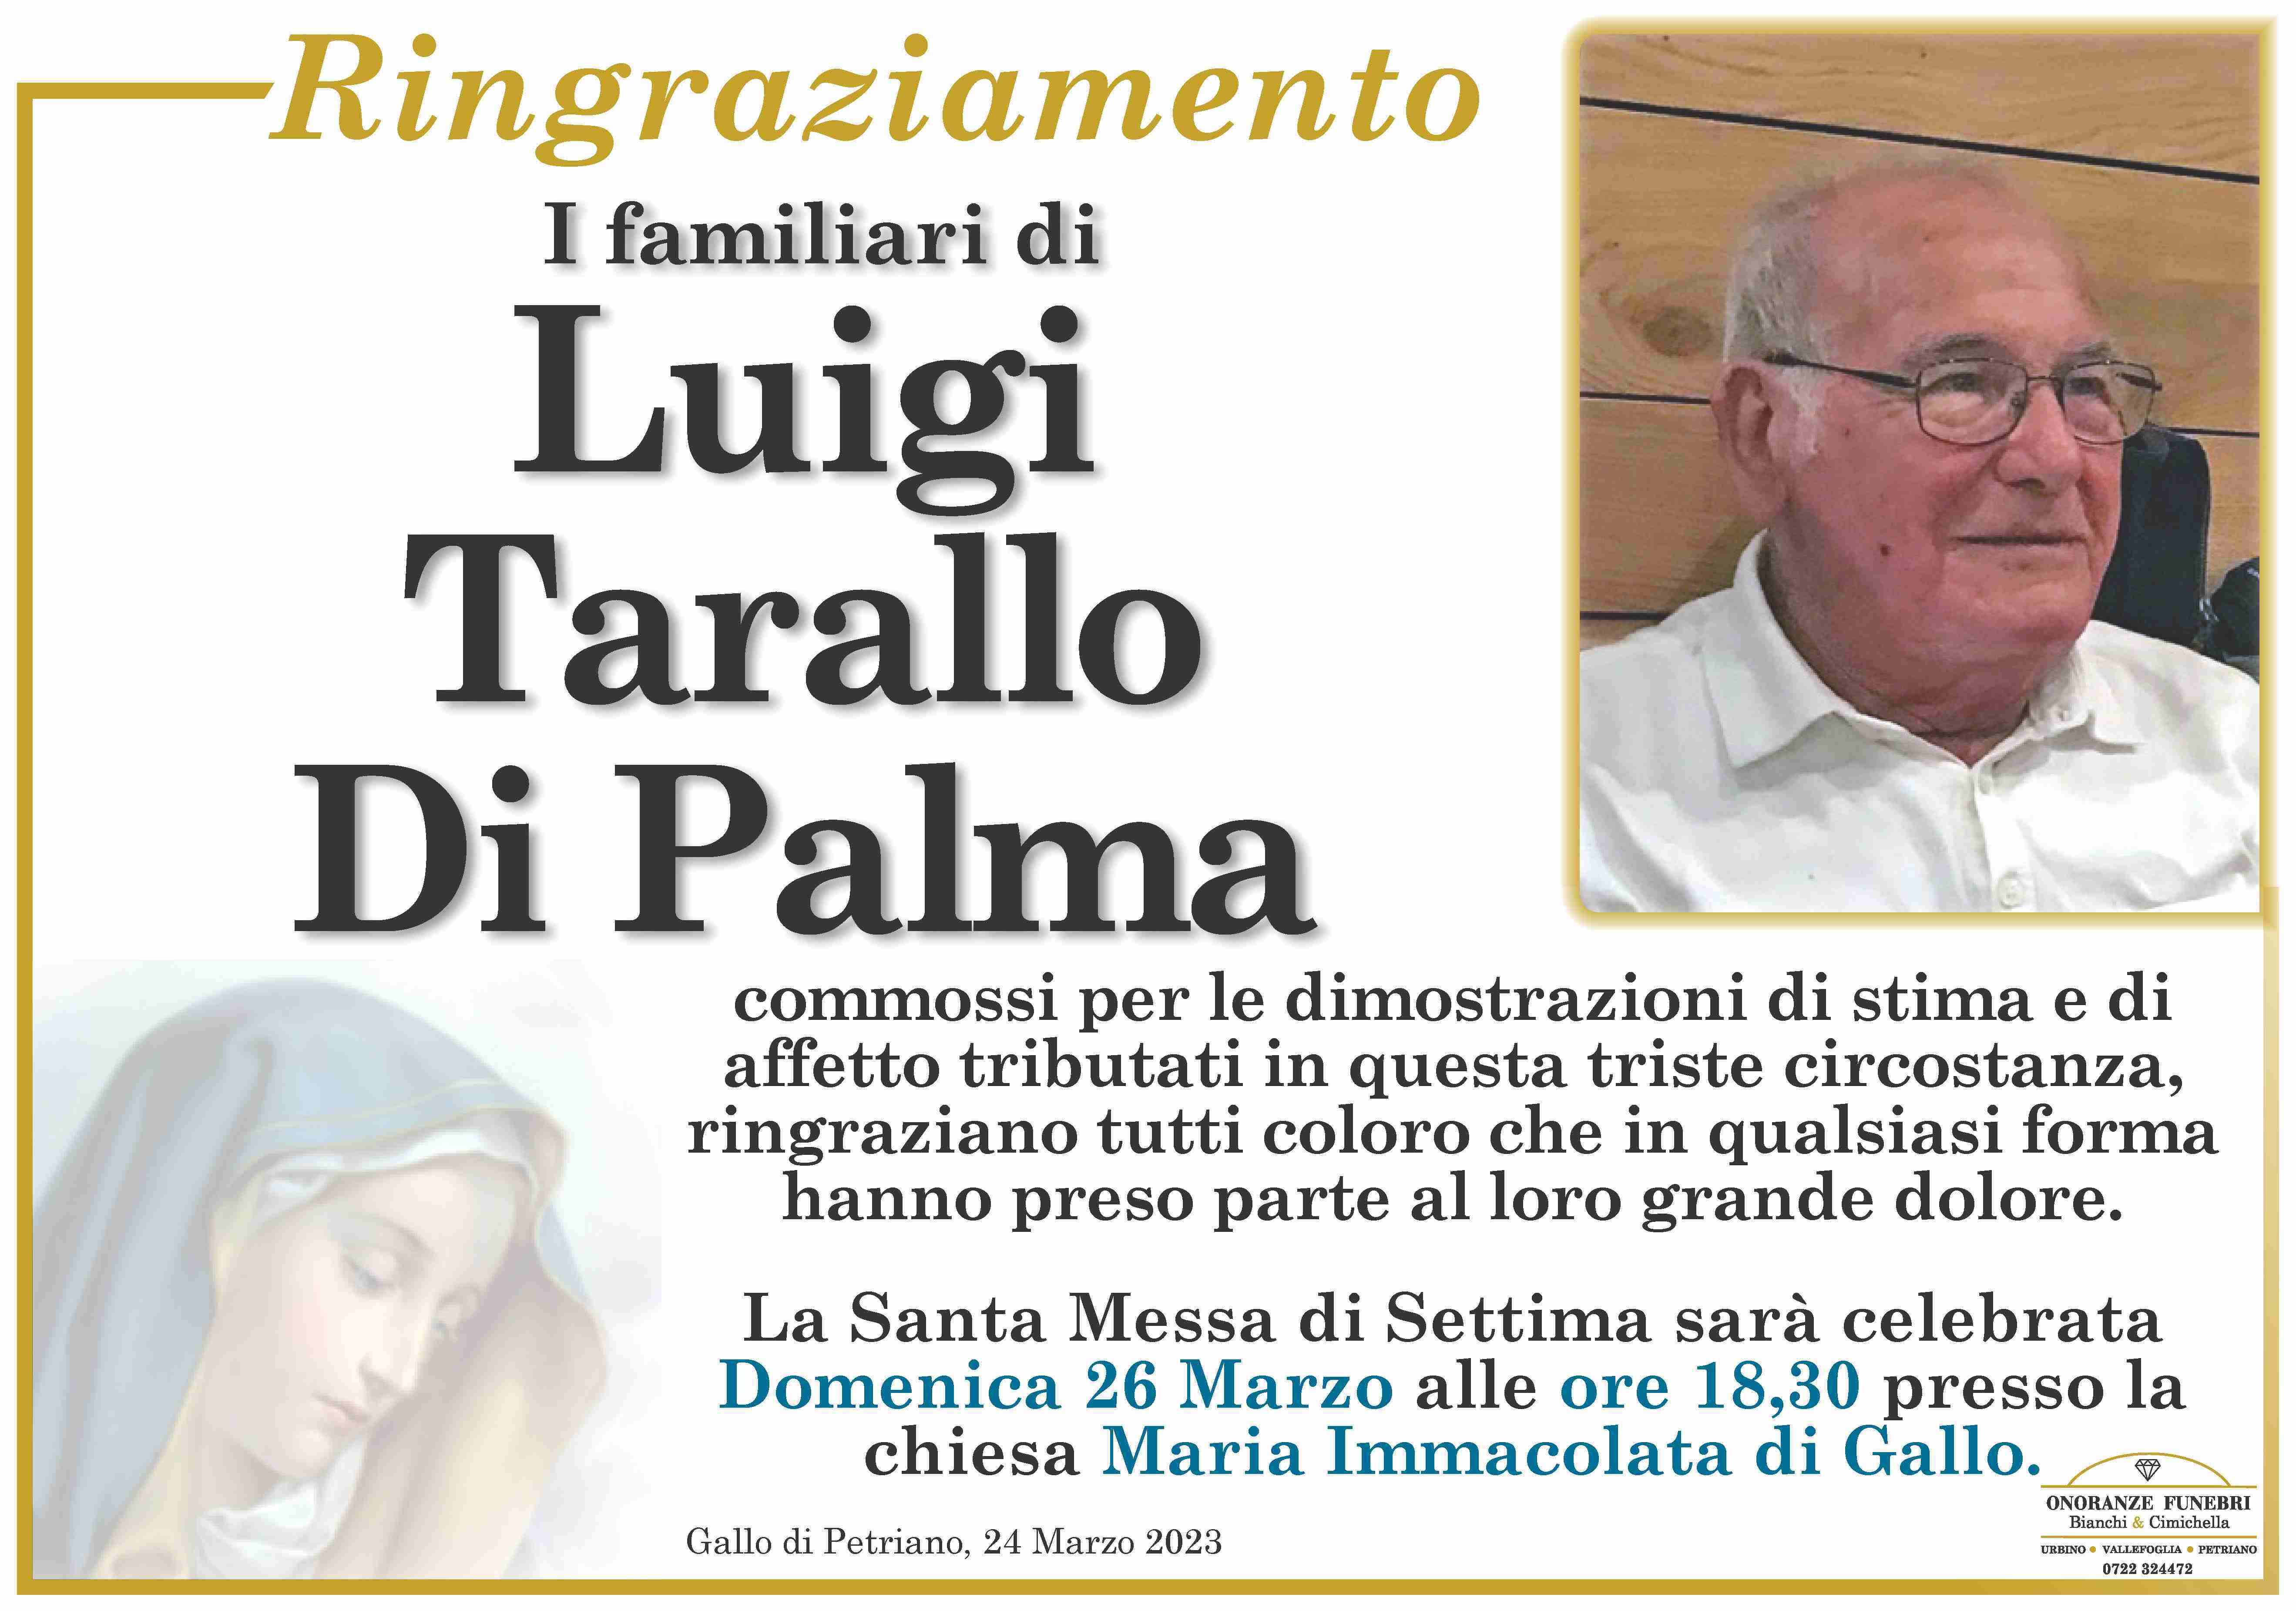 Luigi Tarallo Di Palma